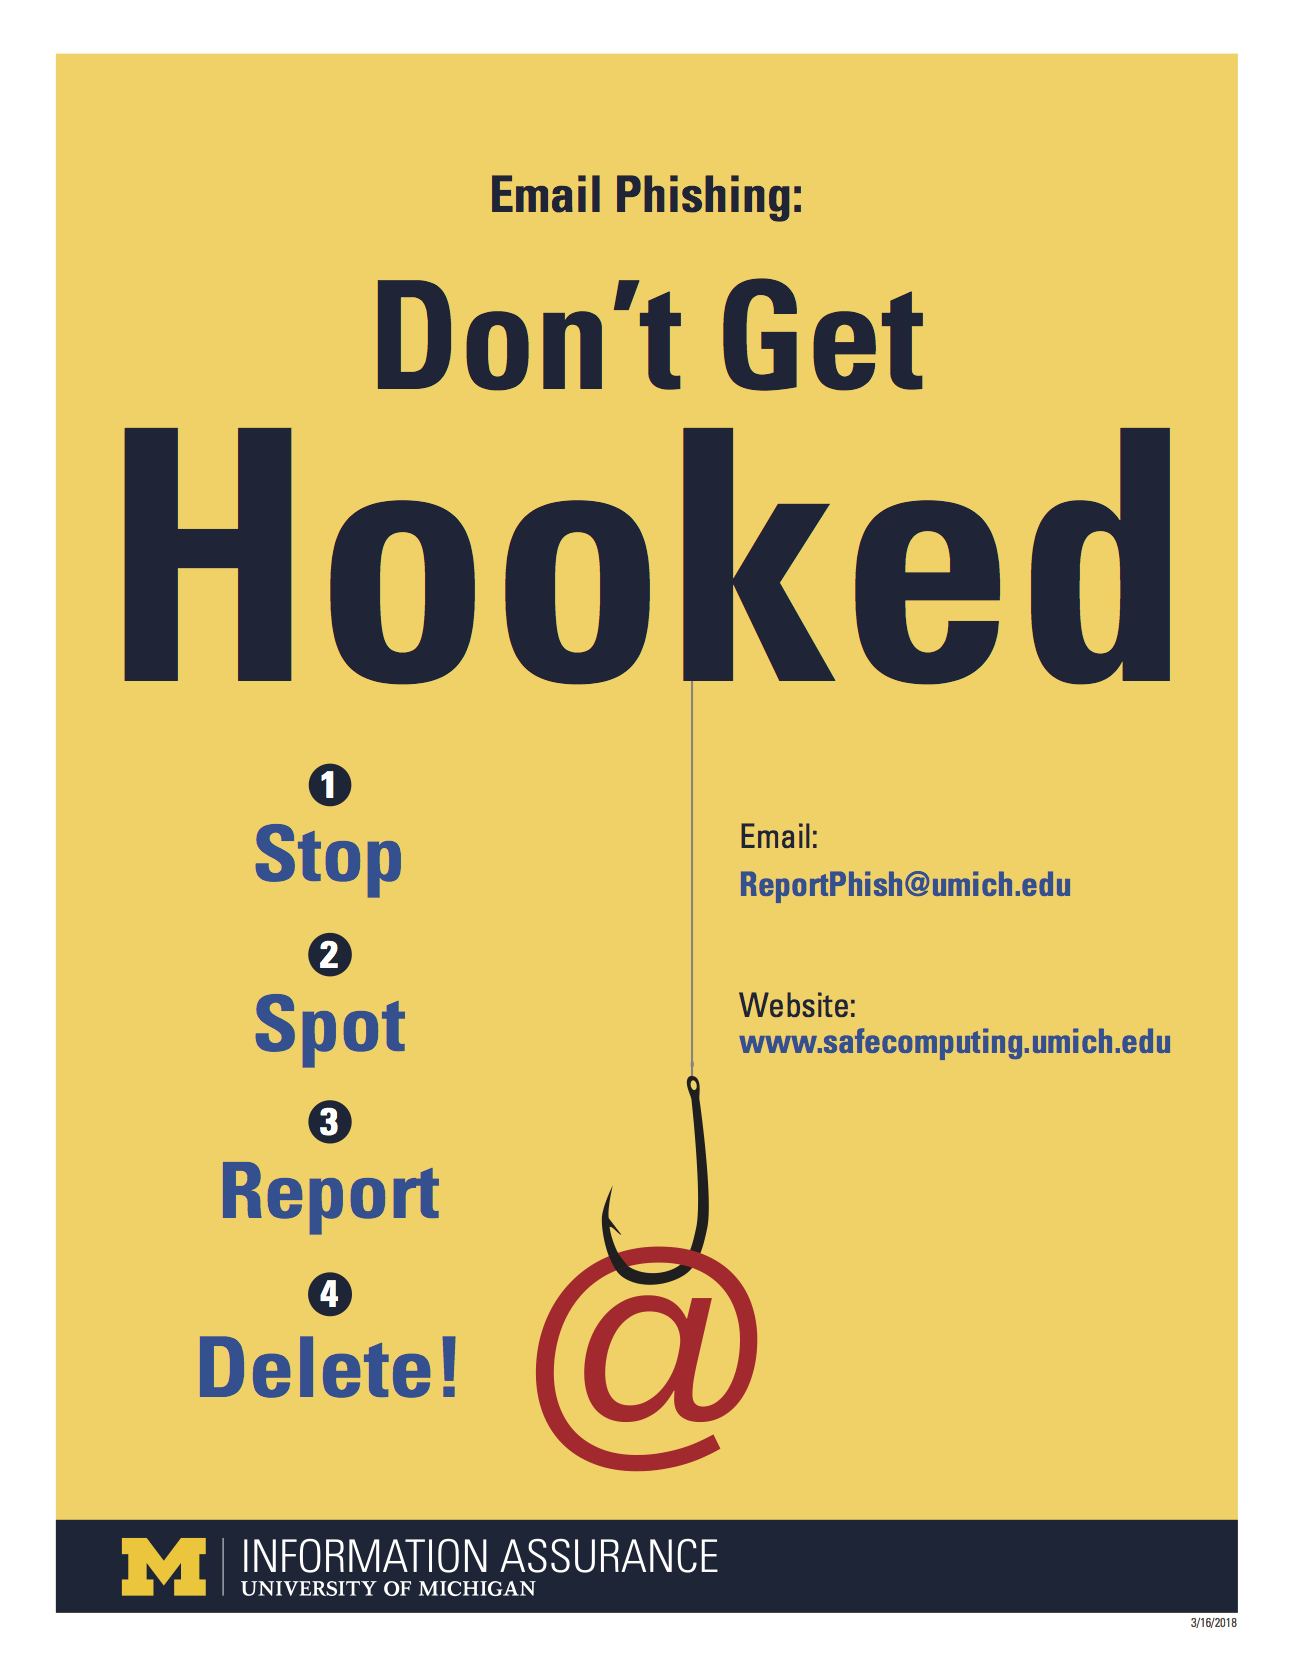 Image of the anti-phishing poster.